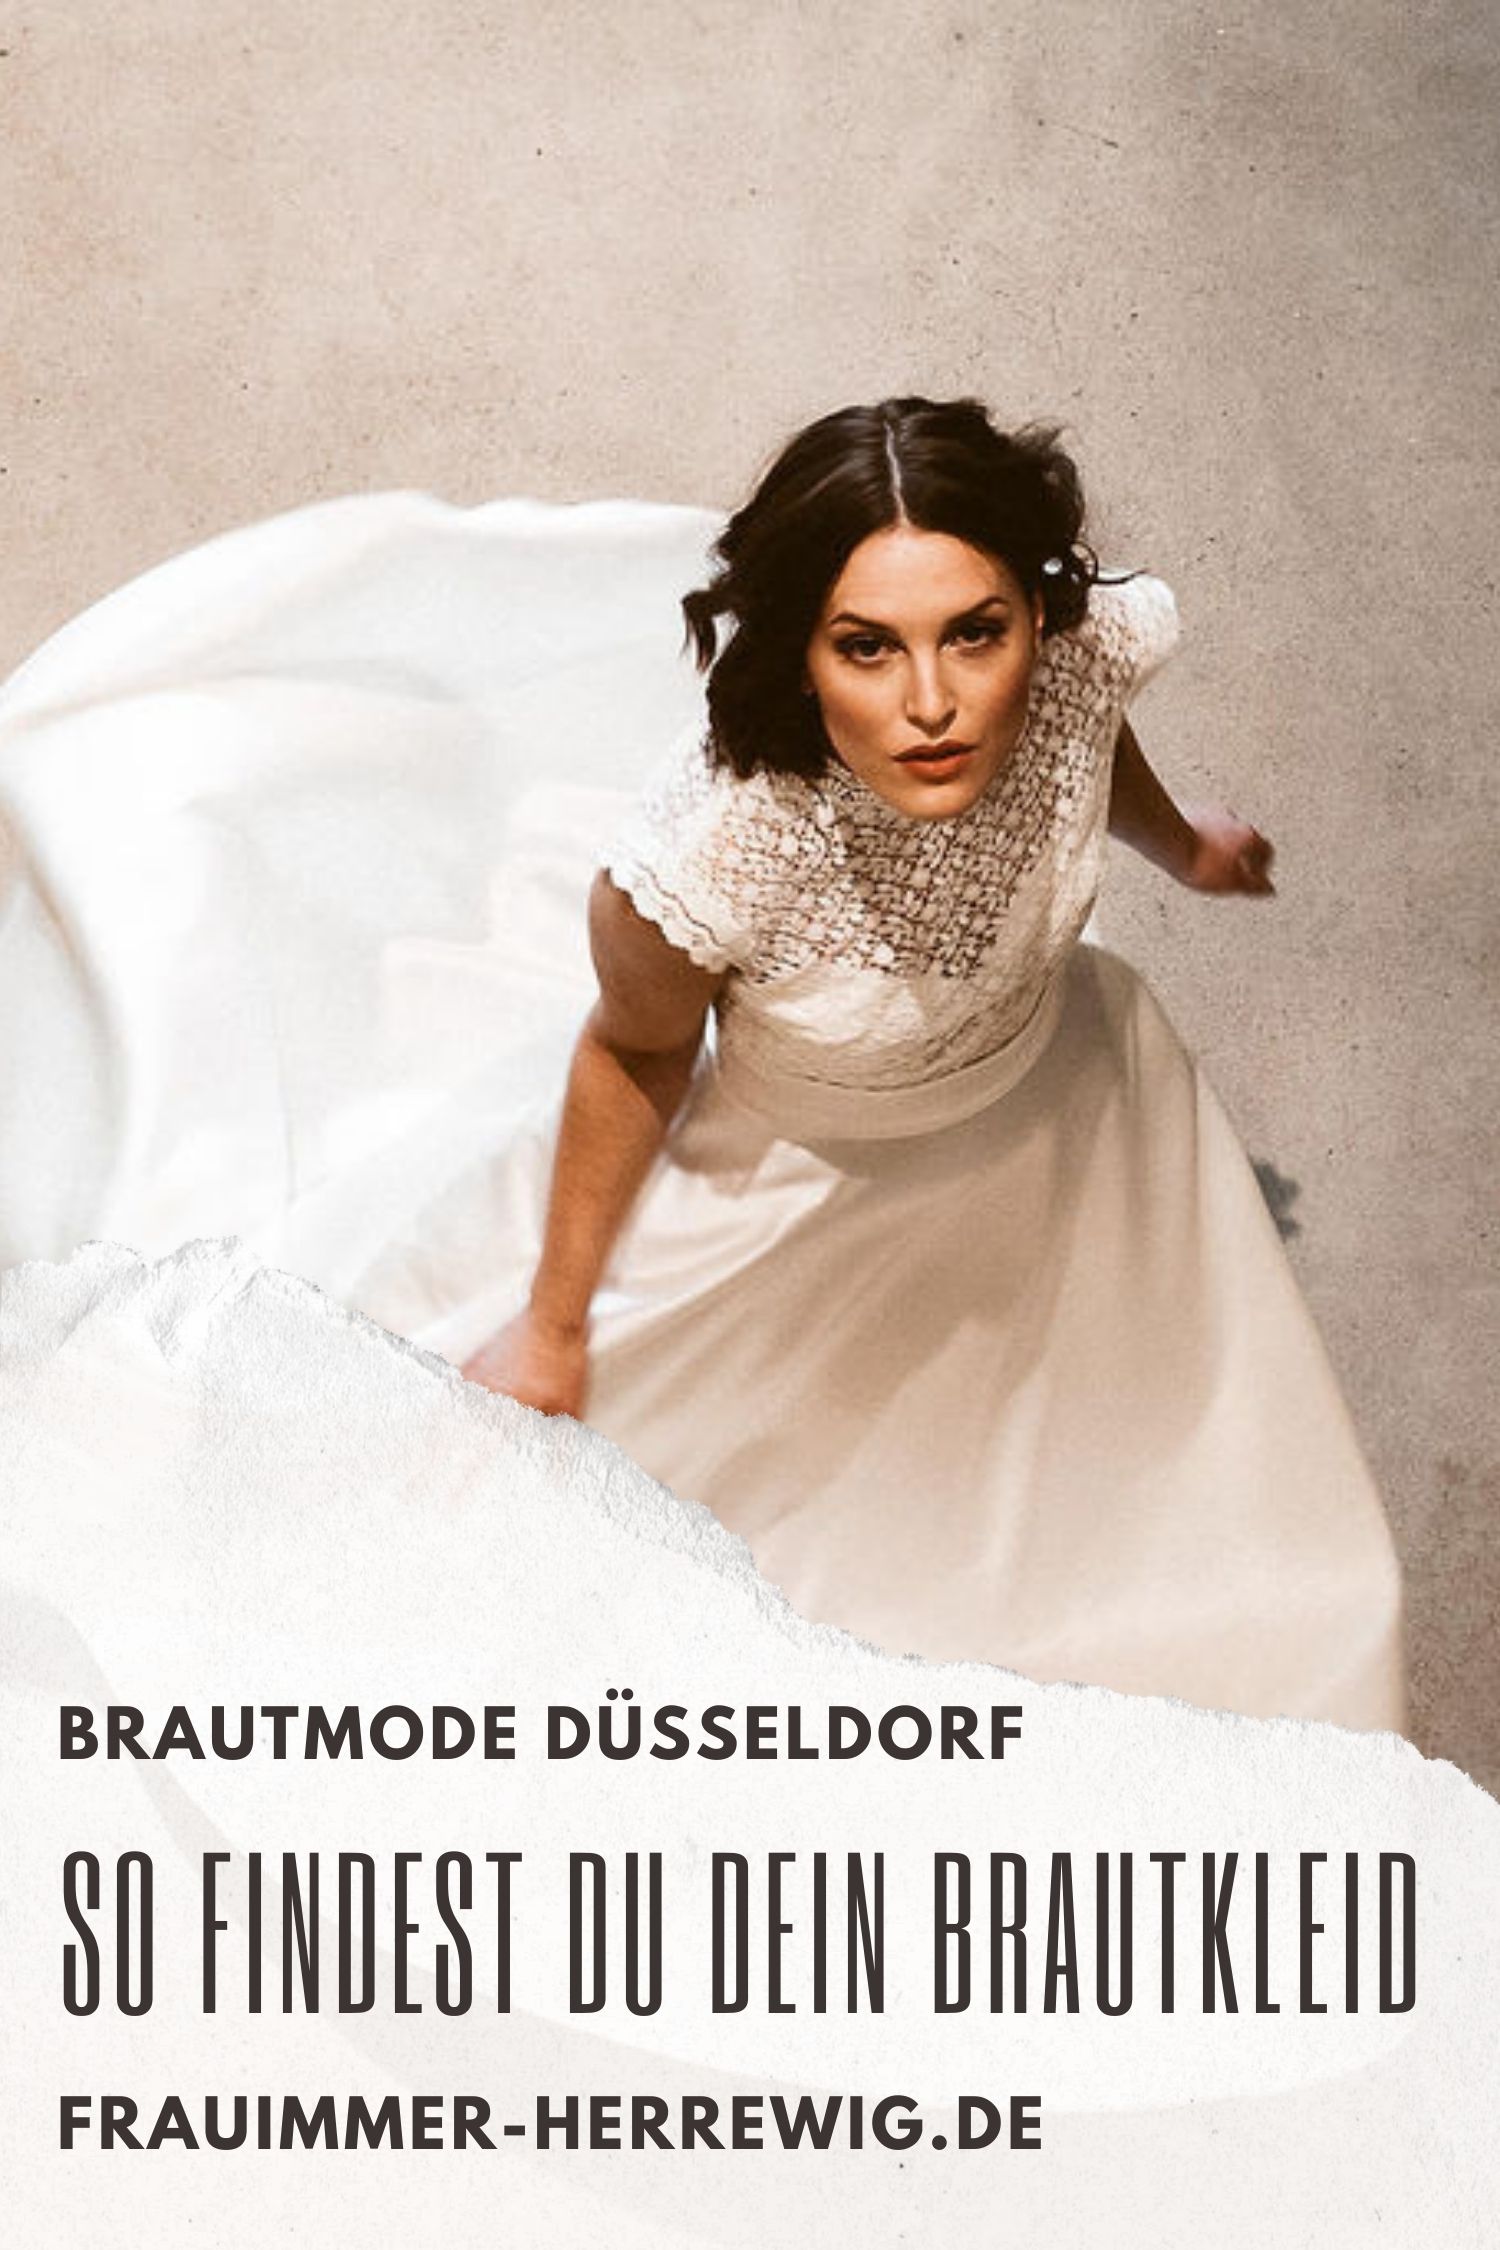 Brautmode duesseldorf – gesehen bei frauimmer-herrewig.de